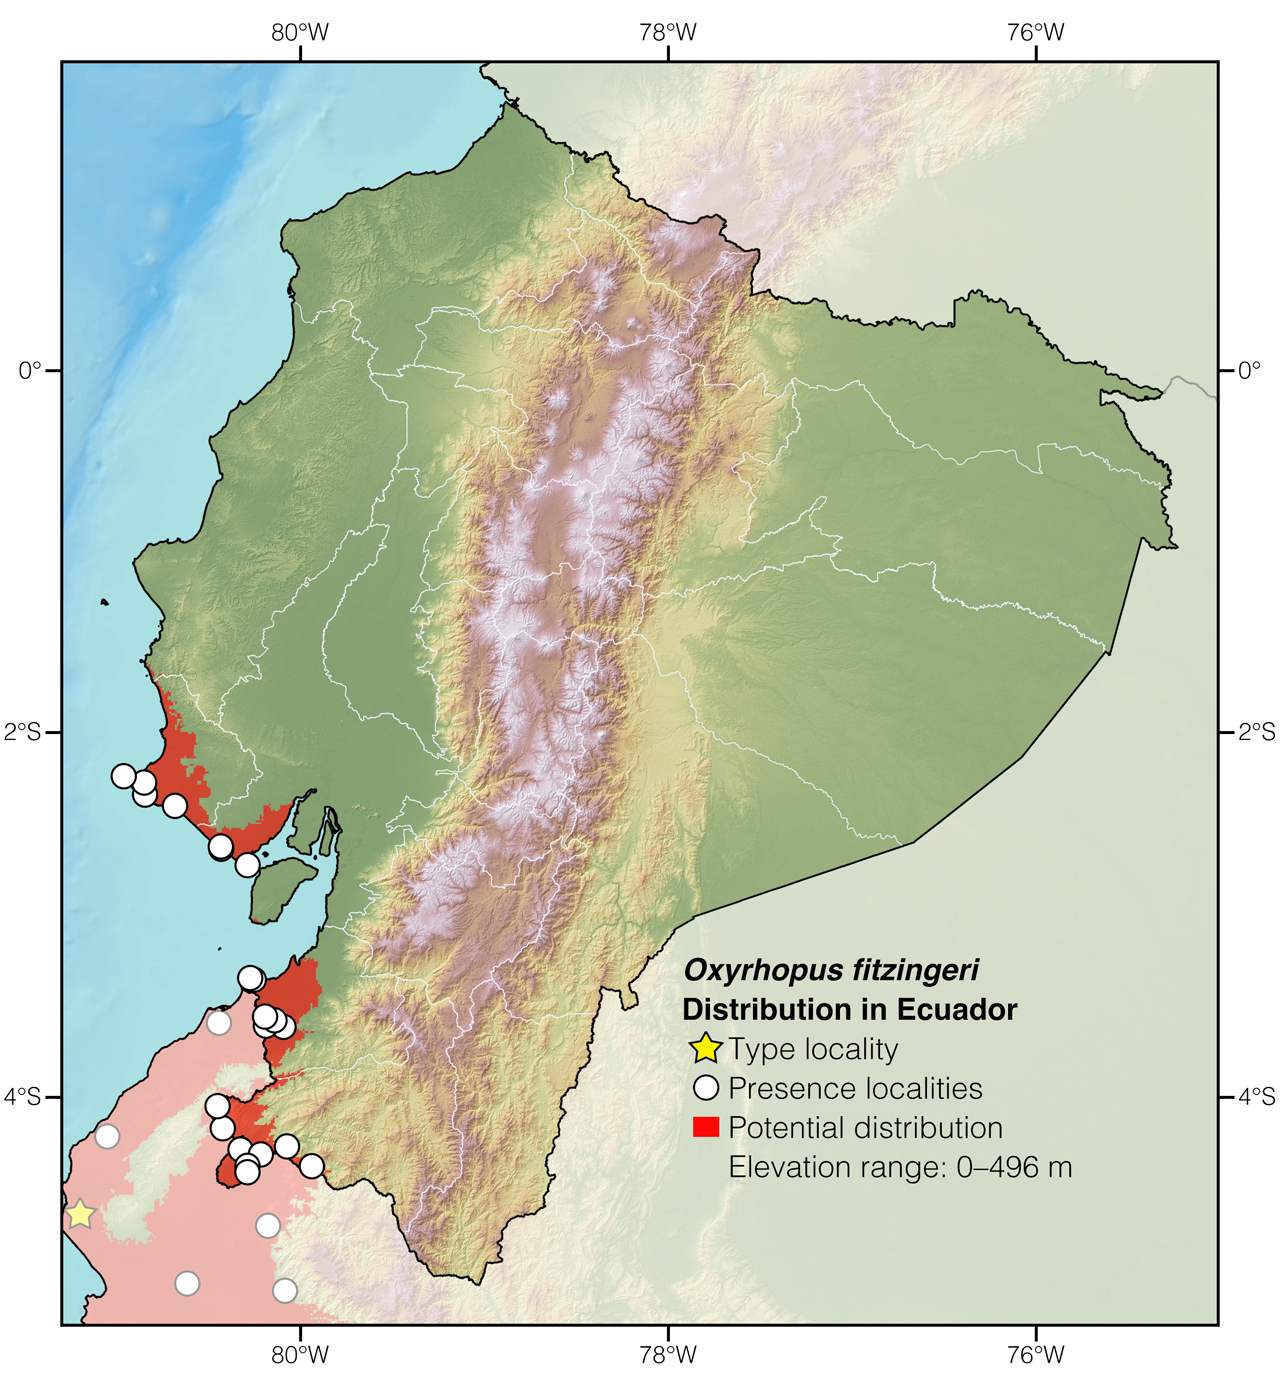 Distribution of Oxyrhopus fitzingeri in Ecuador